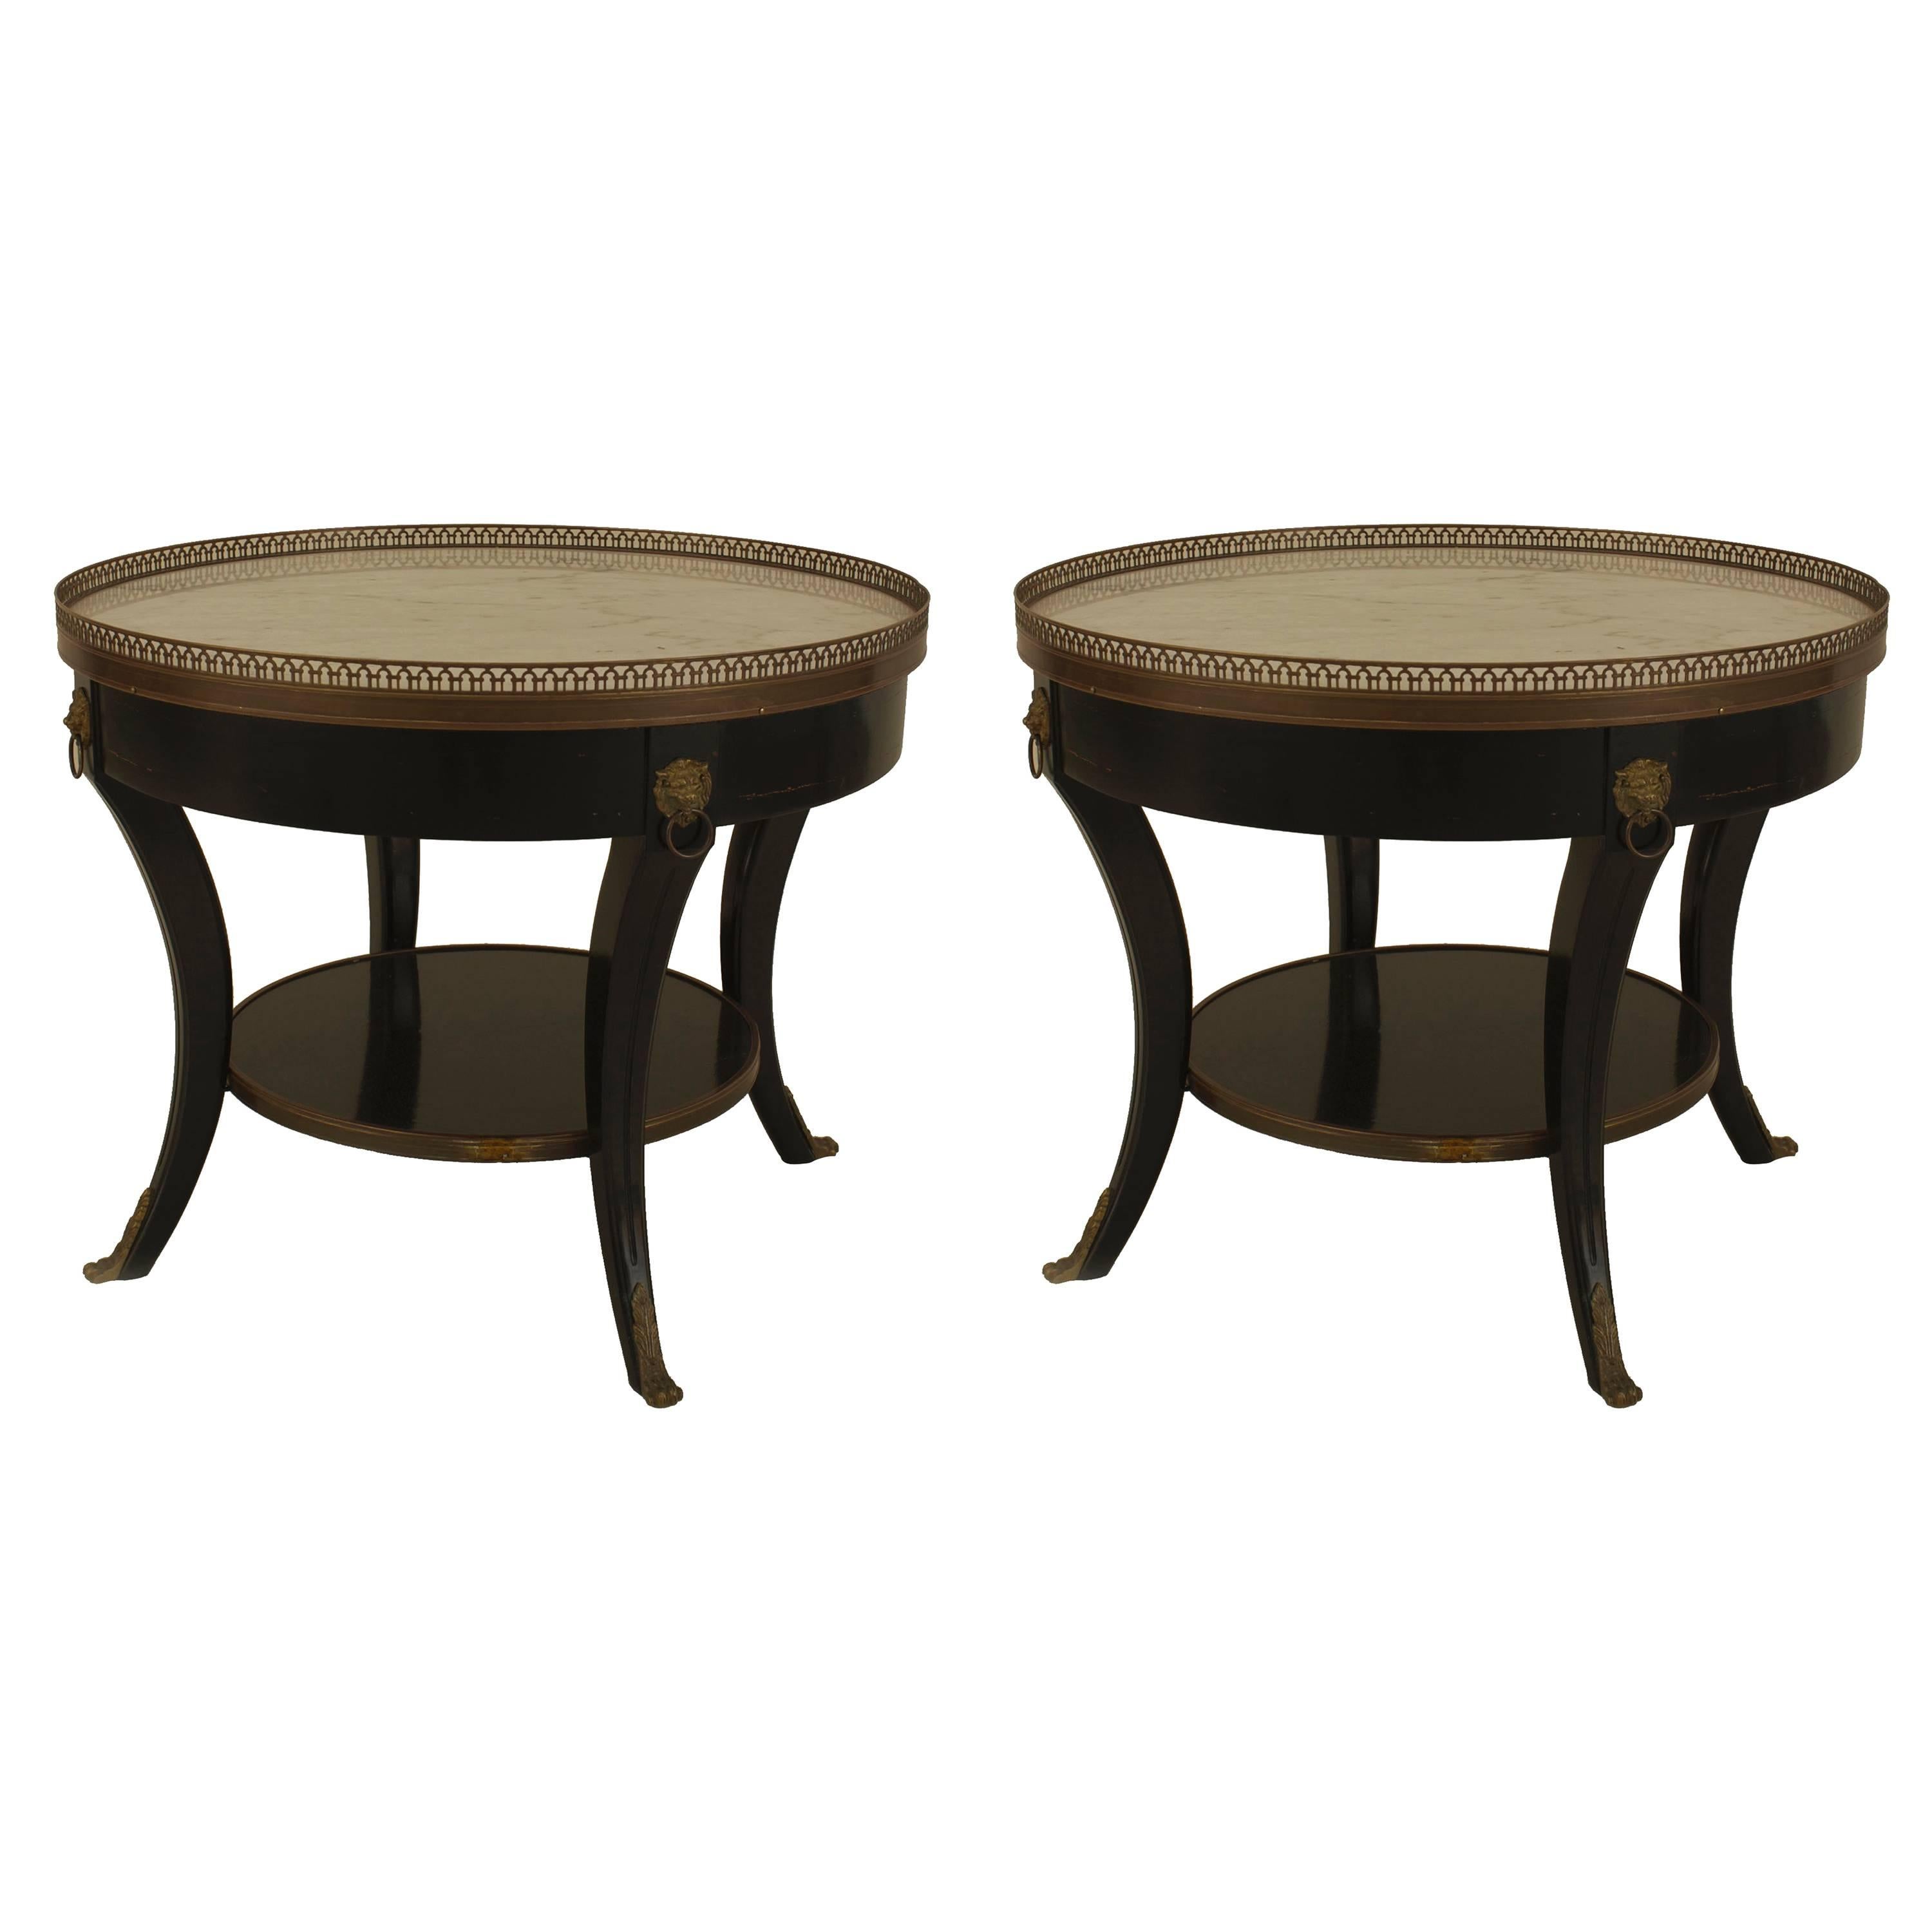 Pair of Maison Jansen Louis XVI Style Ebonized Marble Top End Tables